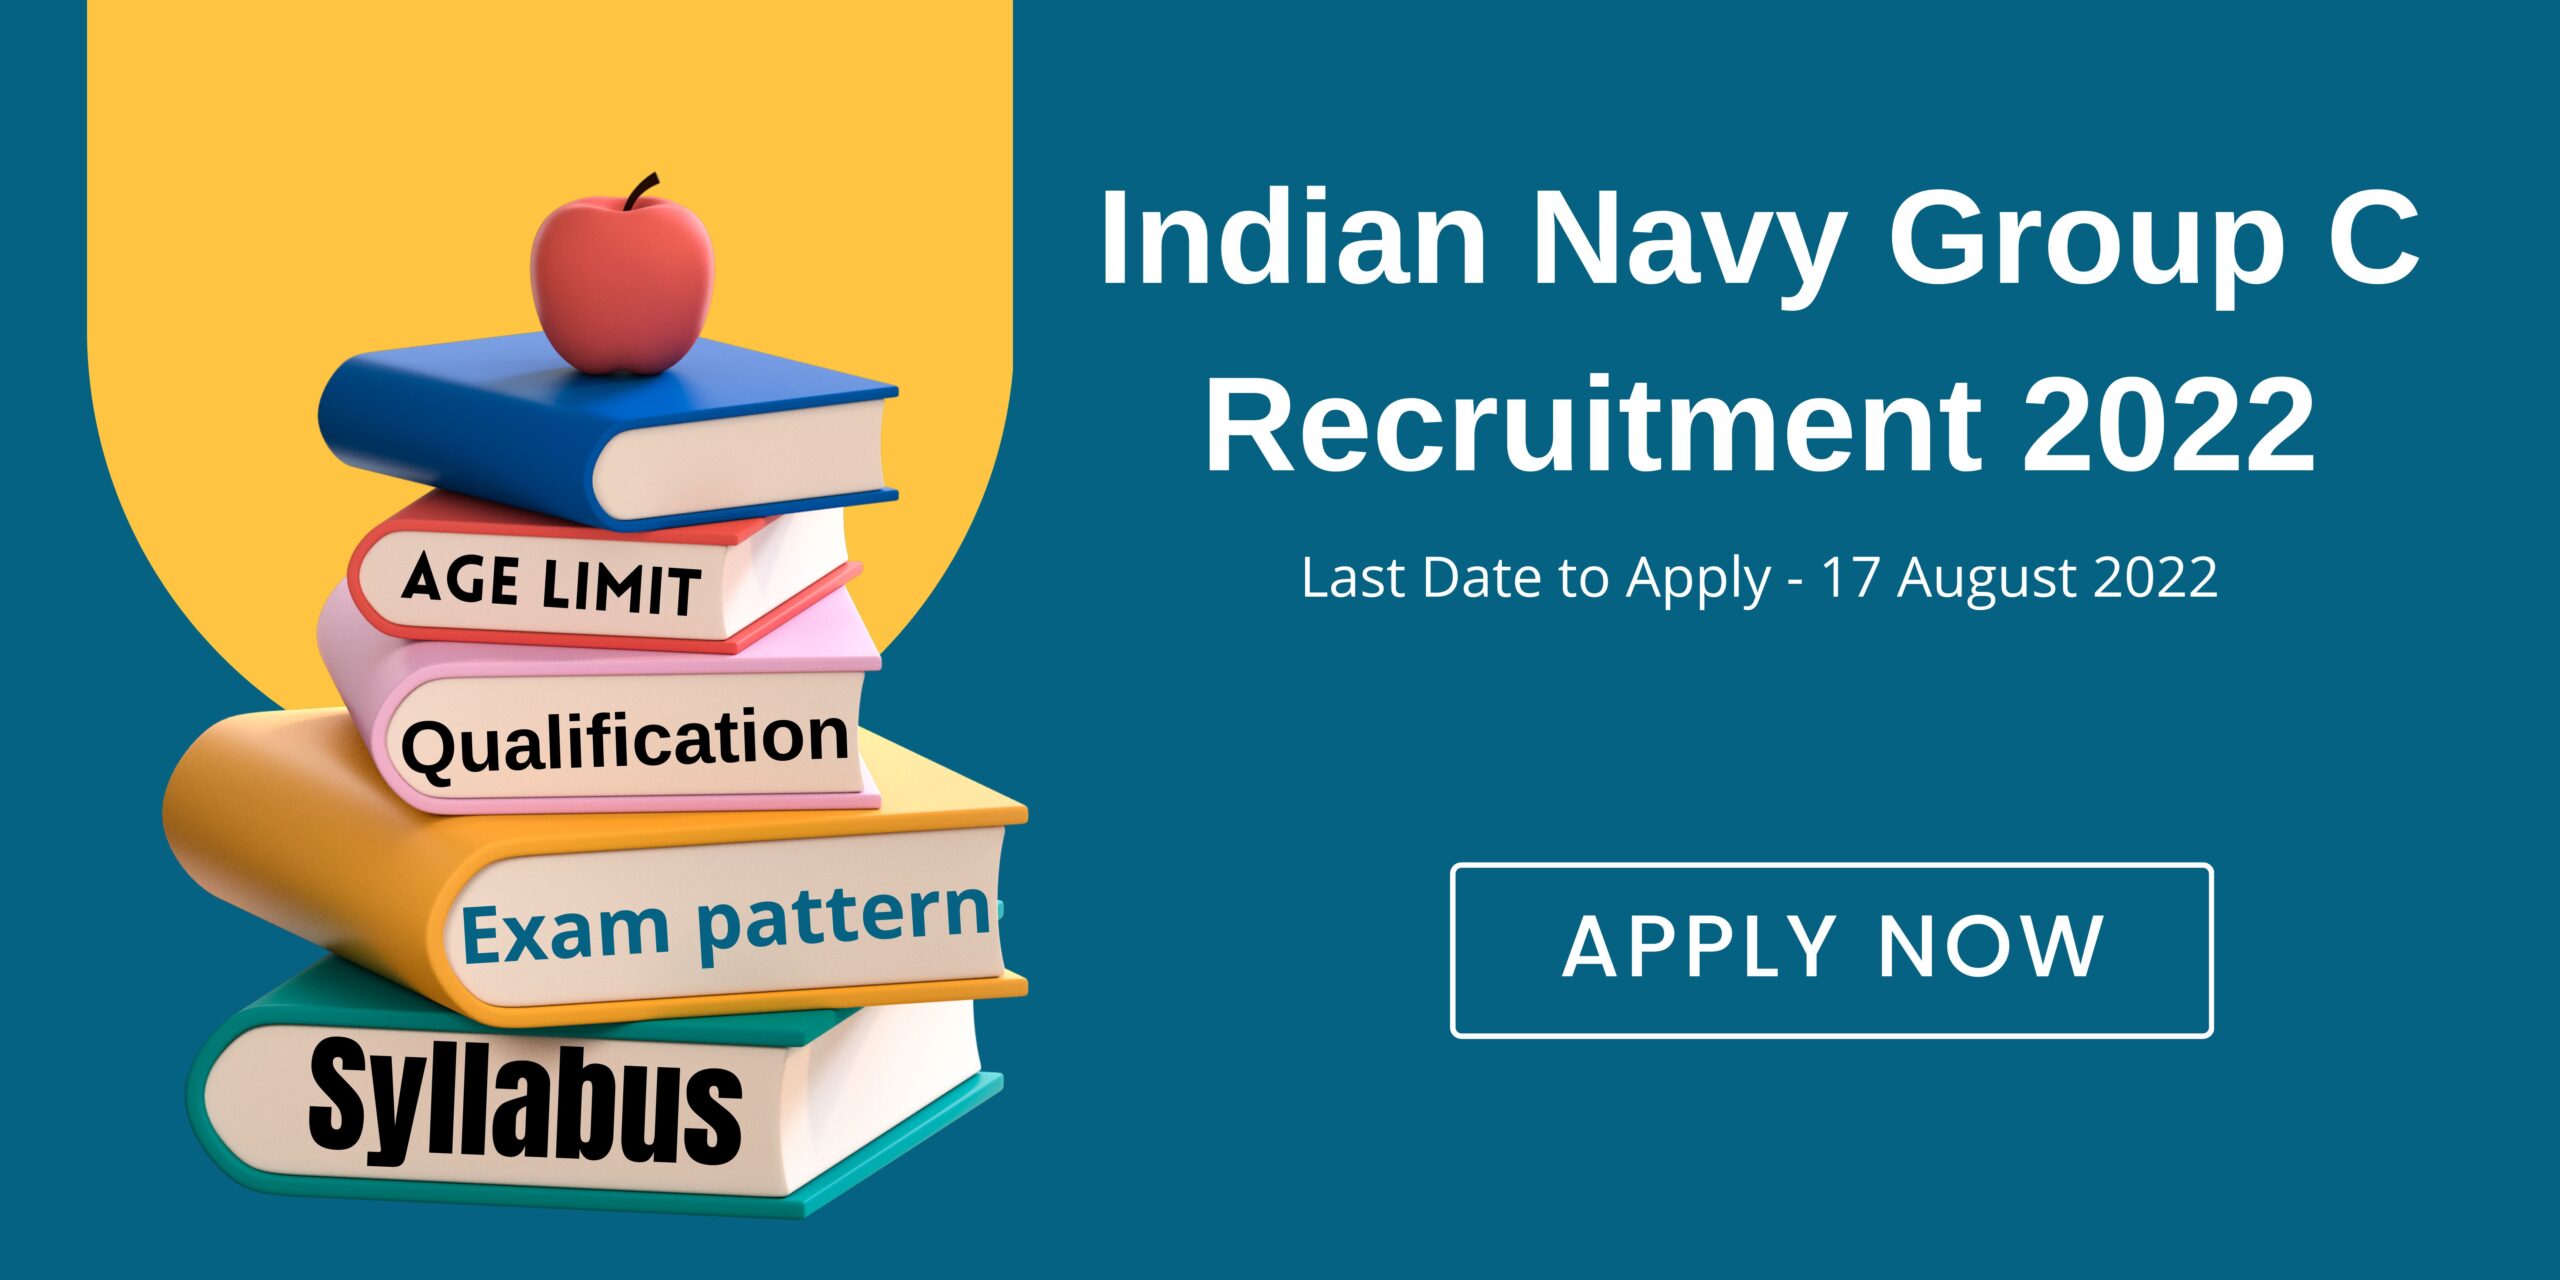 Indian Navy Group C Recruitment 2022